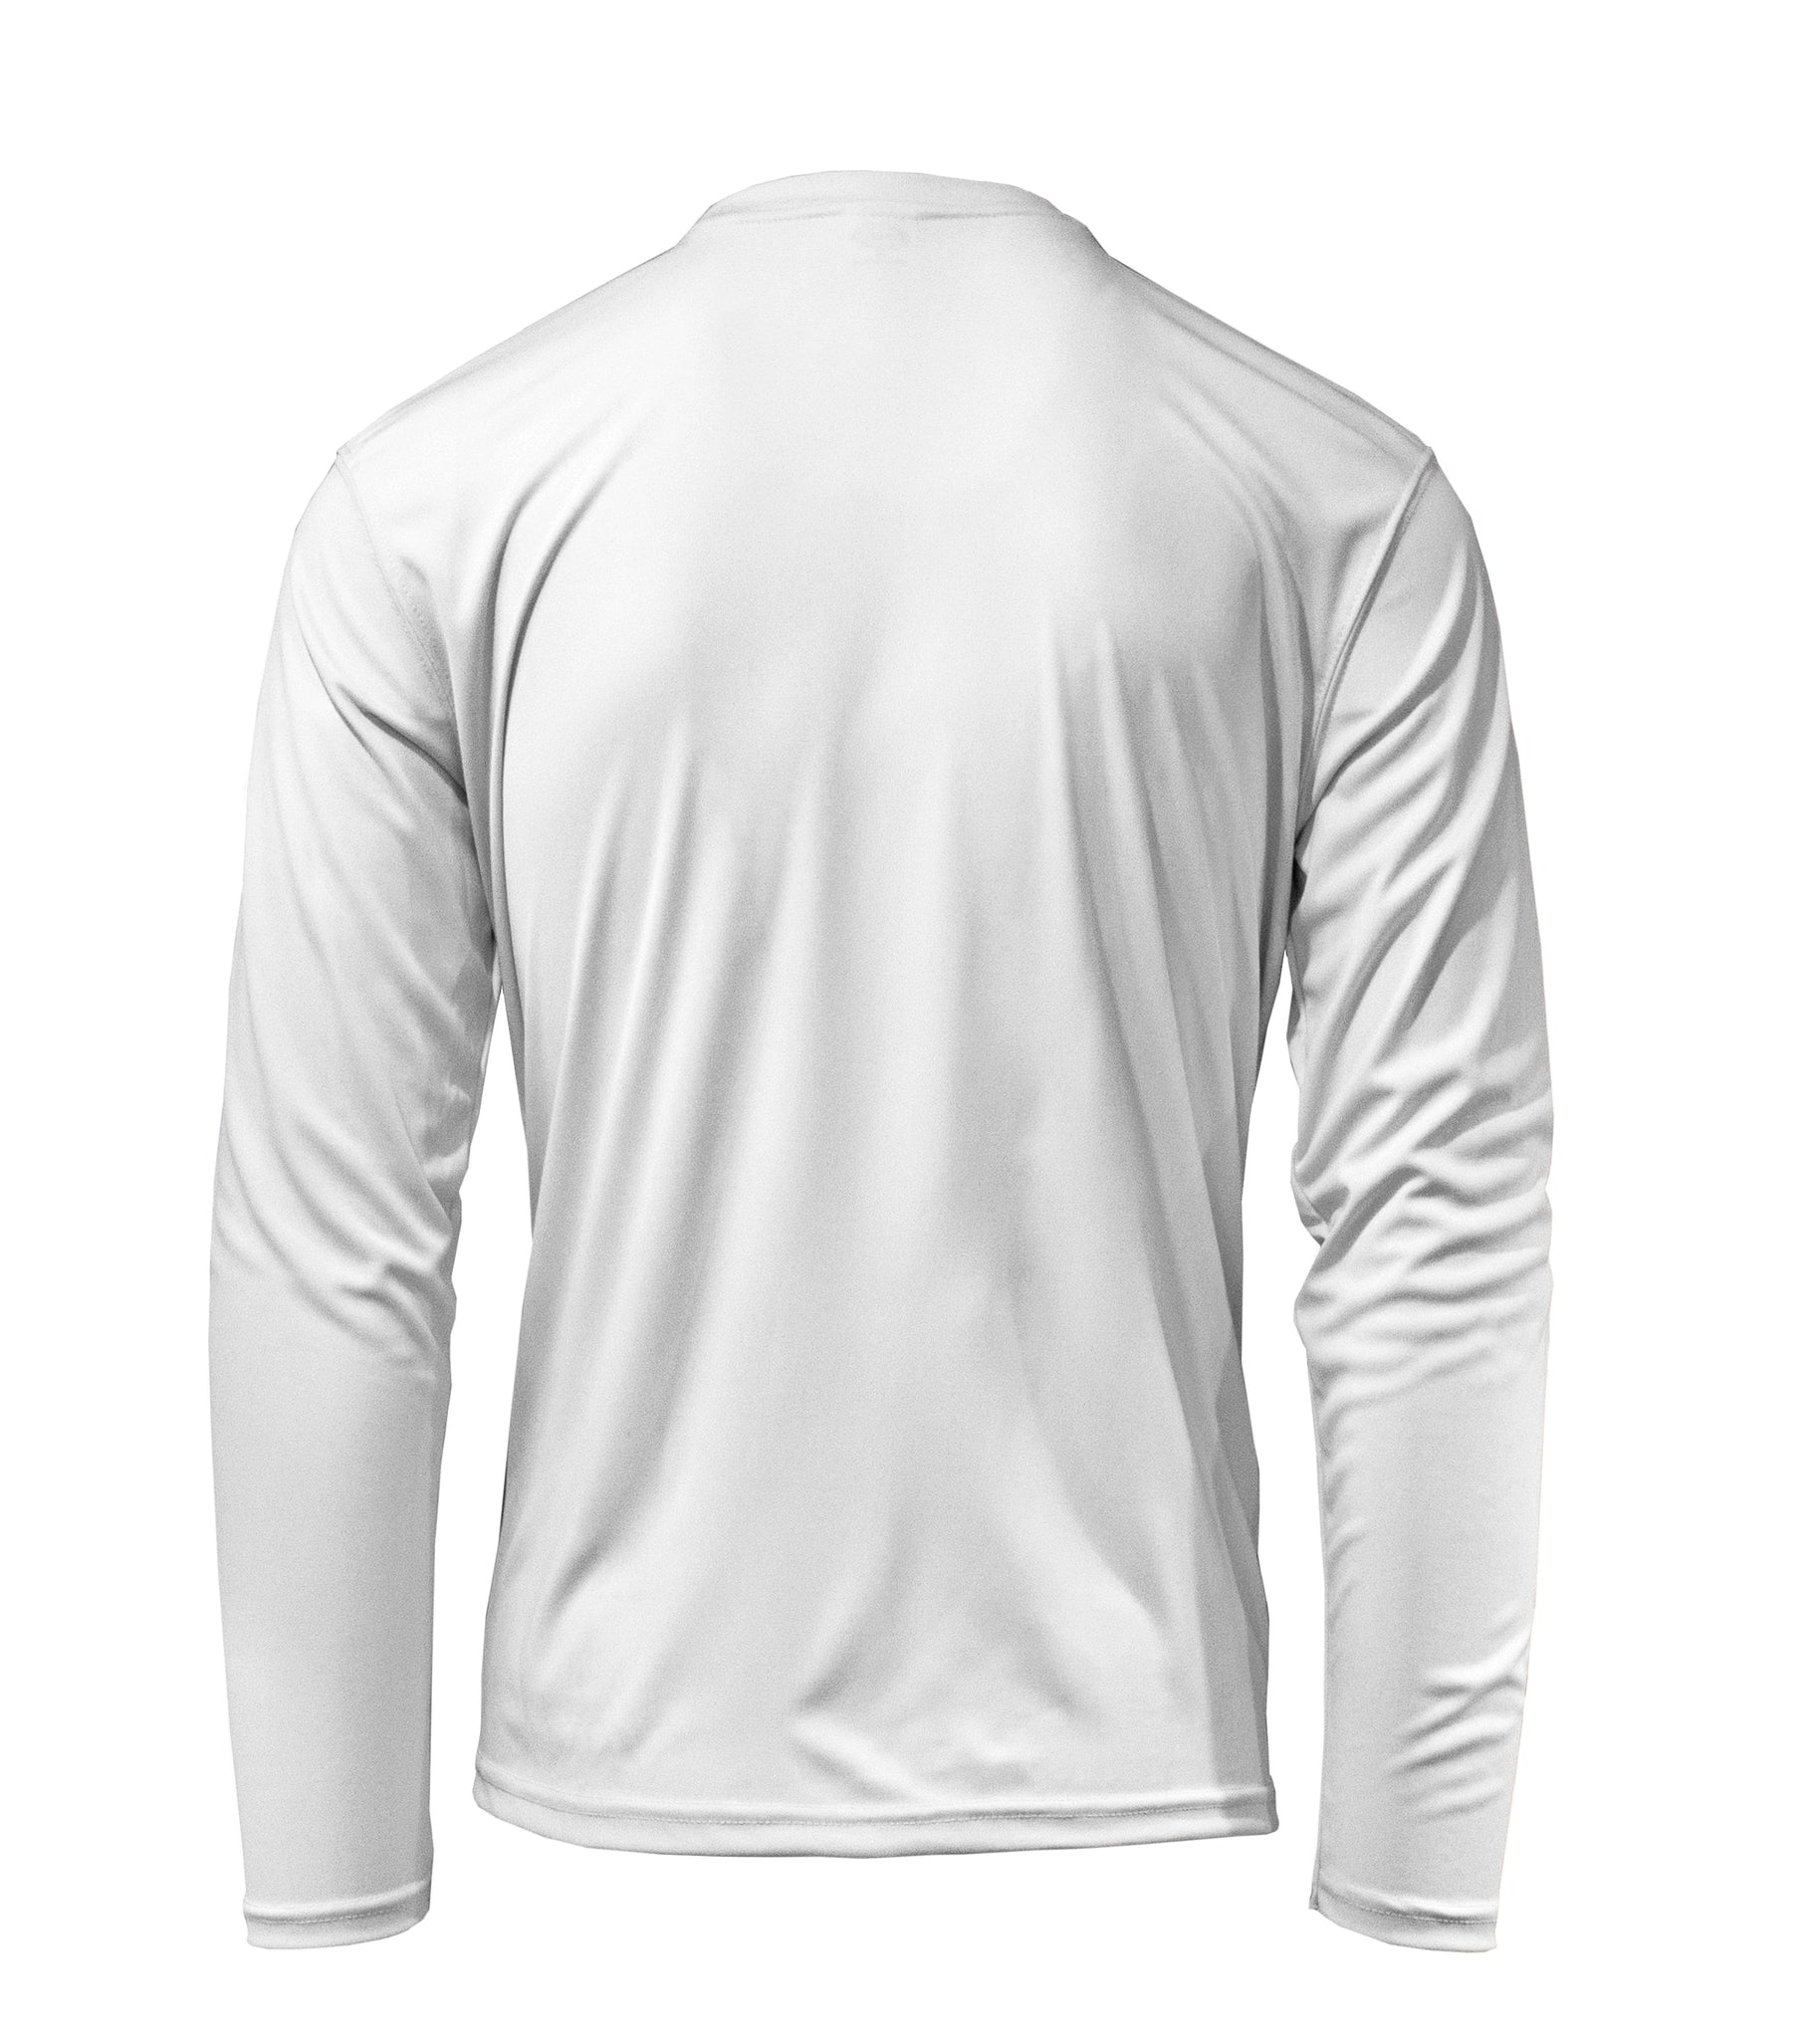 StepChange Performance Shirt in Marine White – StepChange Clothing